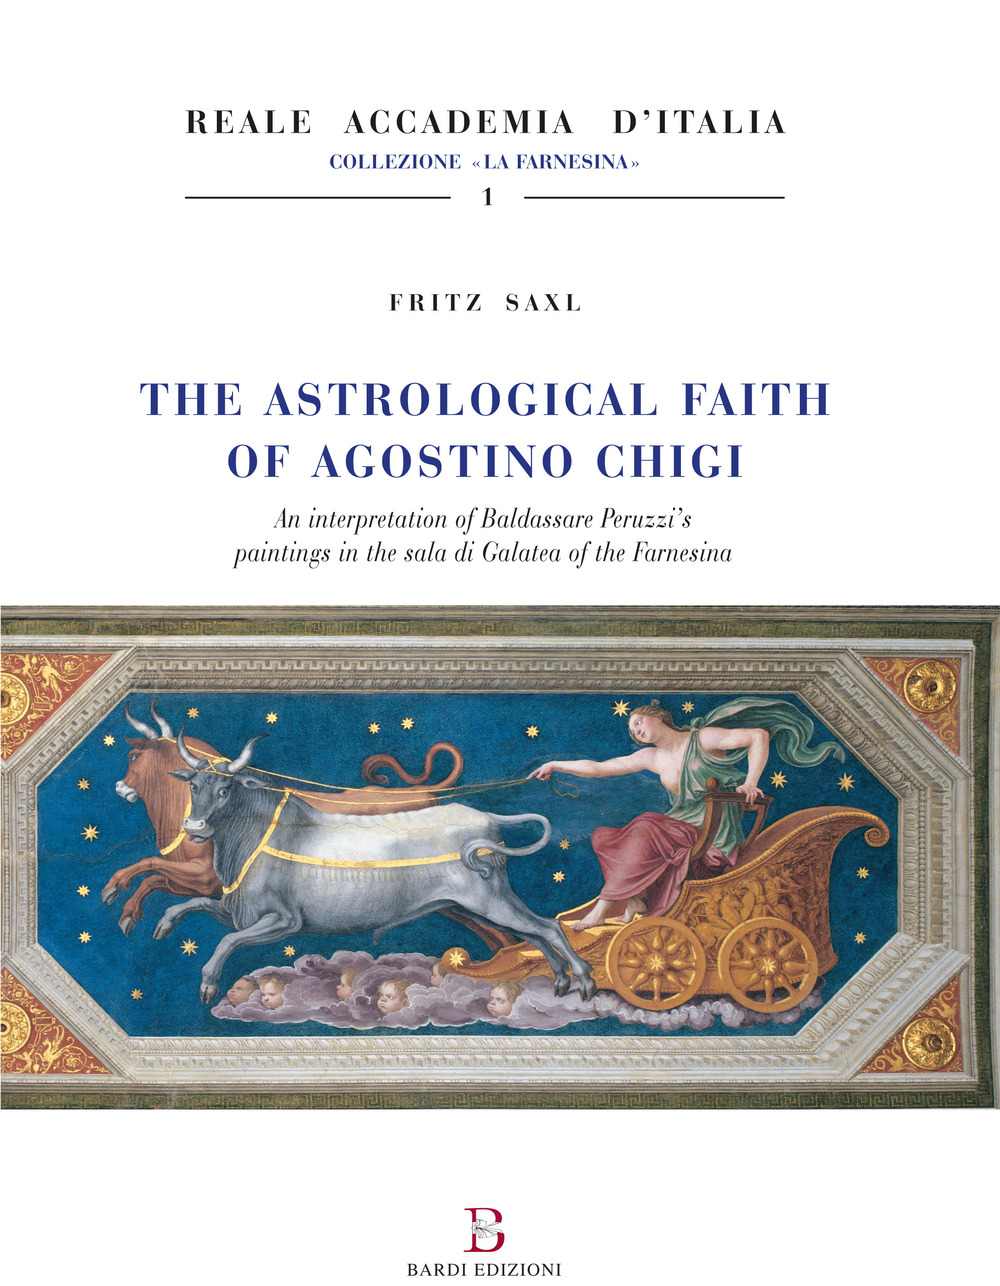 The astrological faith of Agostino Chigi. An interpretation of Baldassarre Peruzzi's paintings in the Sala di Galatea of the Farnesina